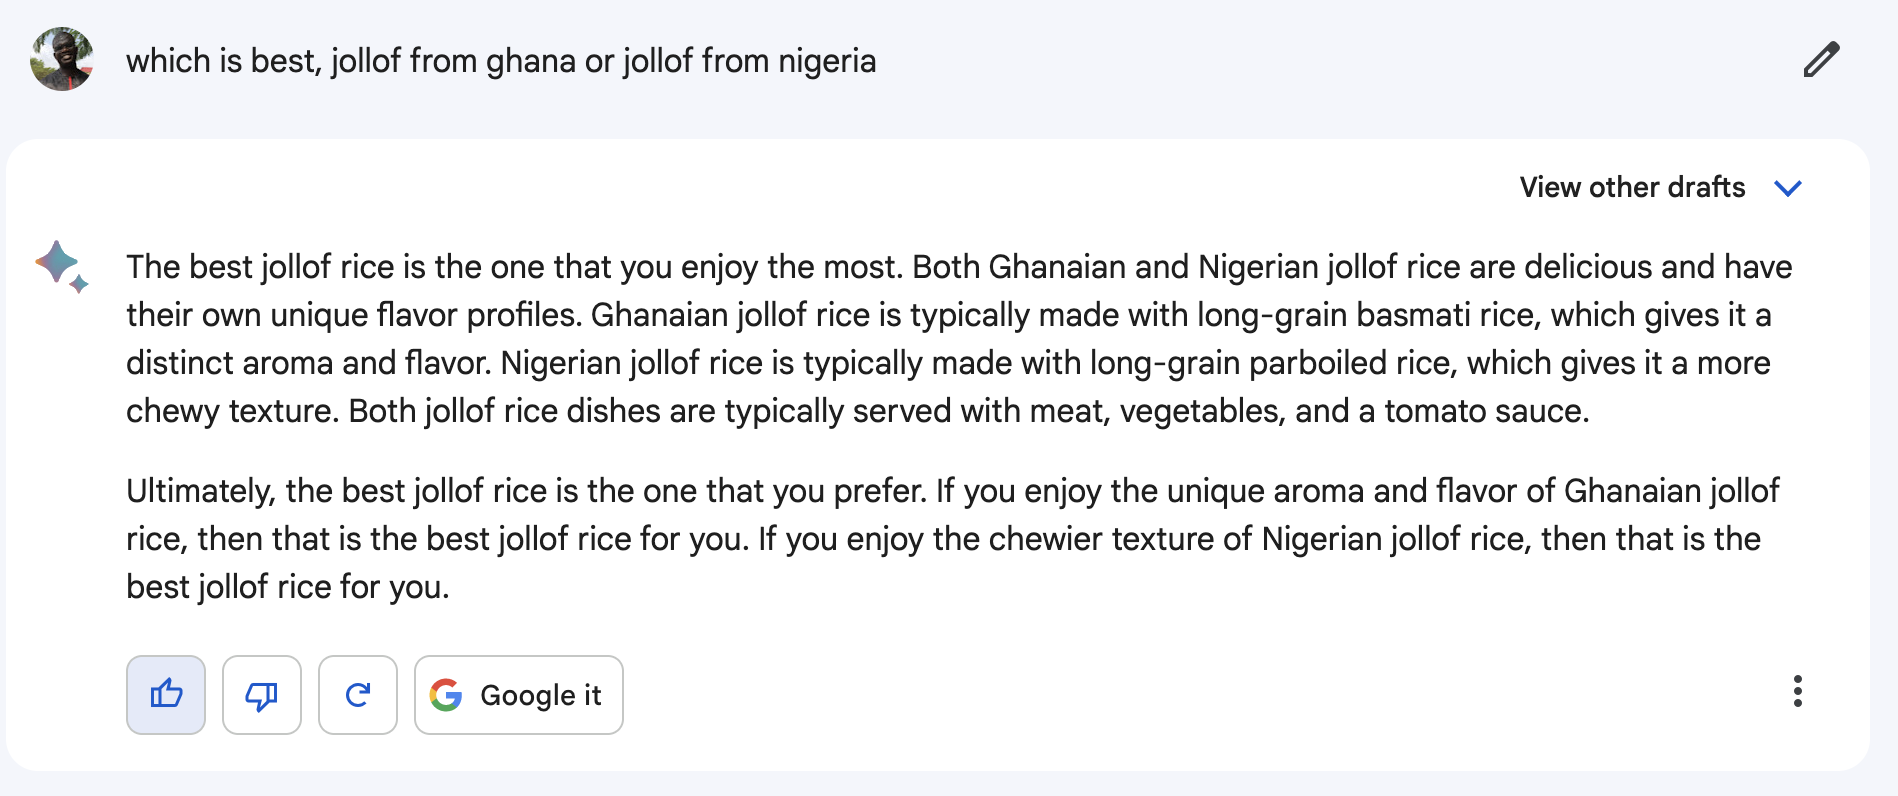 Bard AI trying to decide between Ghana's take on Jollof vs Nigeria's take.